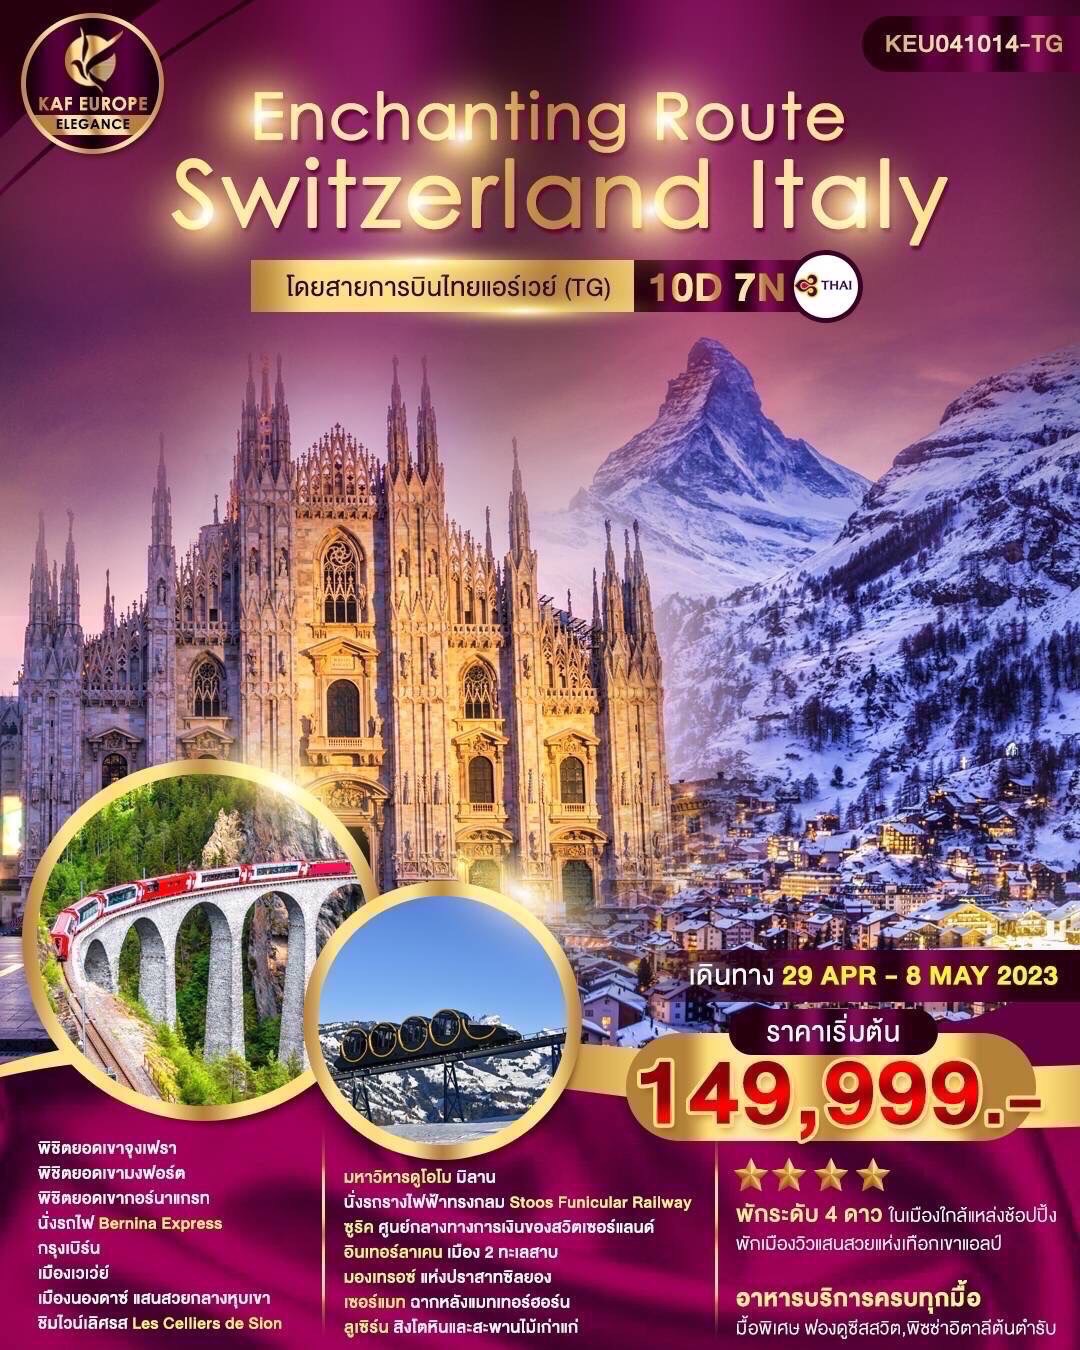  Enchanting Route Switzerland - Italy